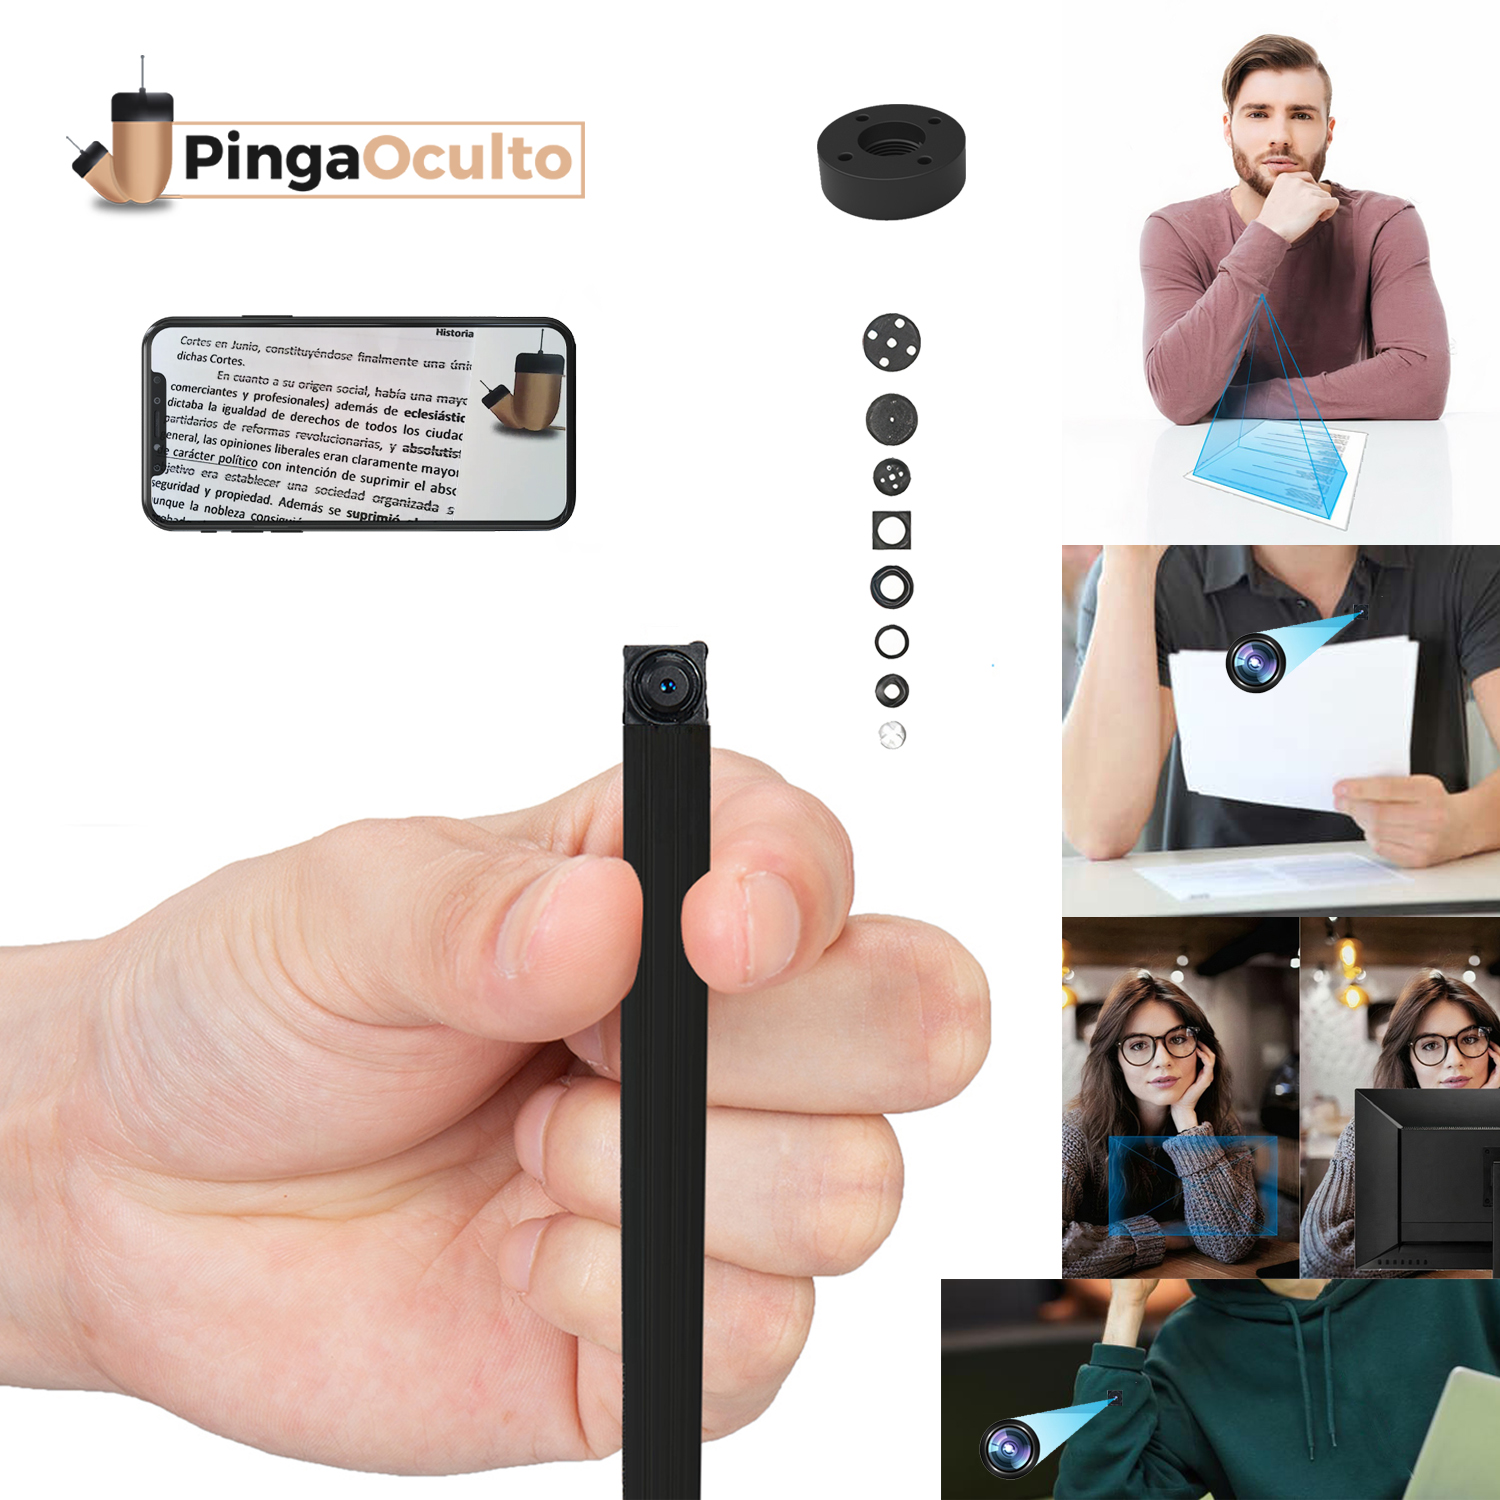 Pinganillo Vip Pro UltraMini Bluetooth - PingaOculto ®